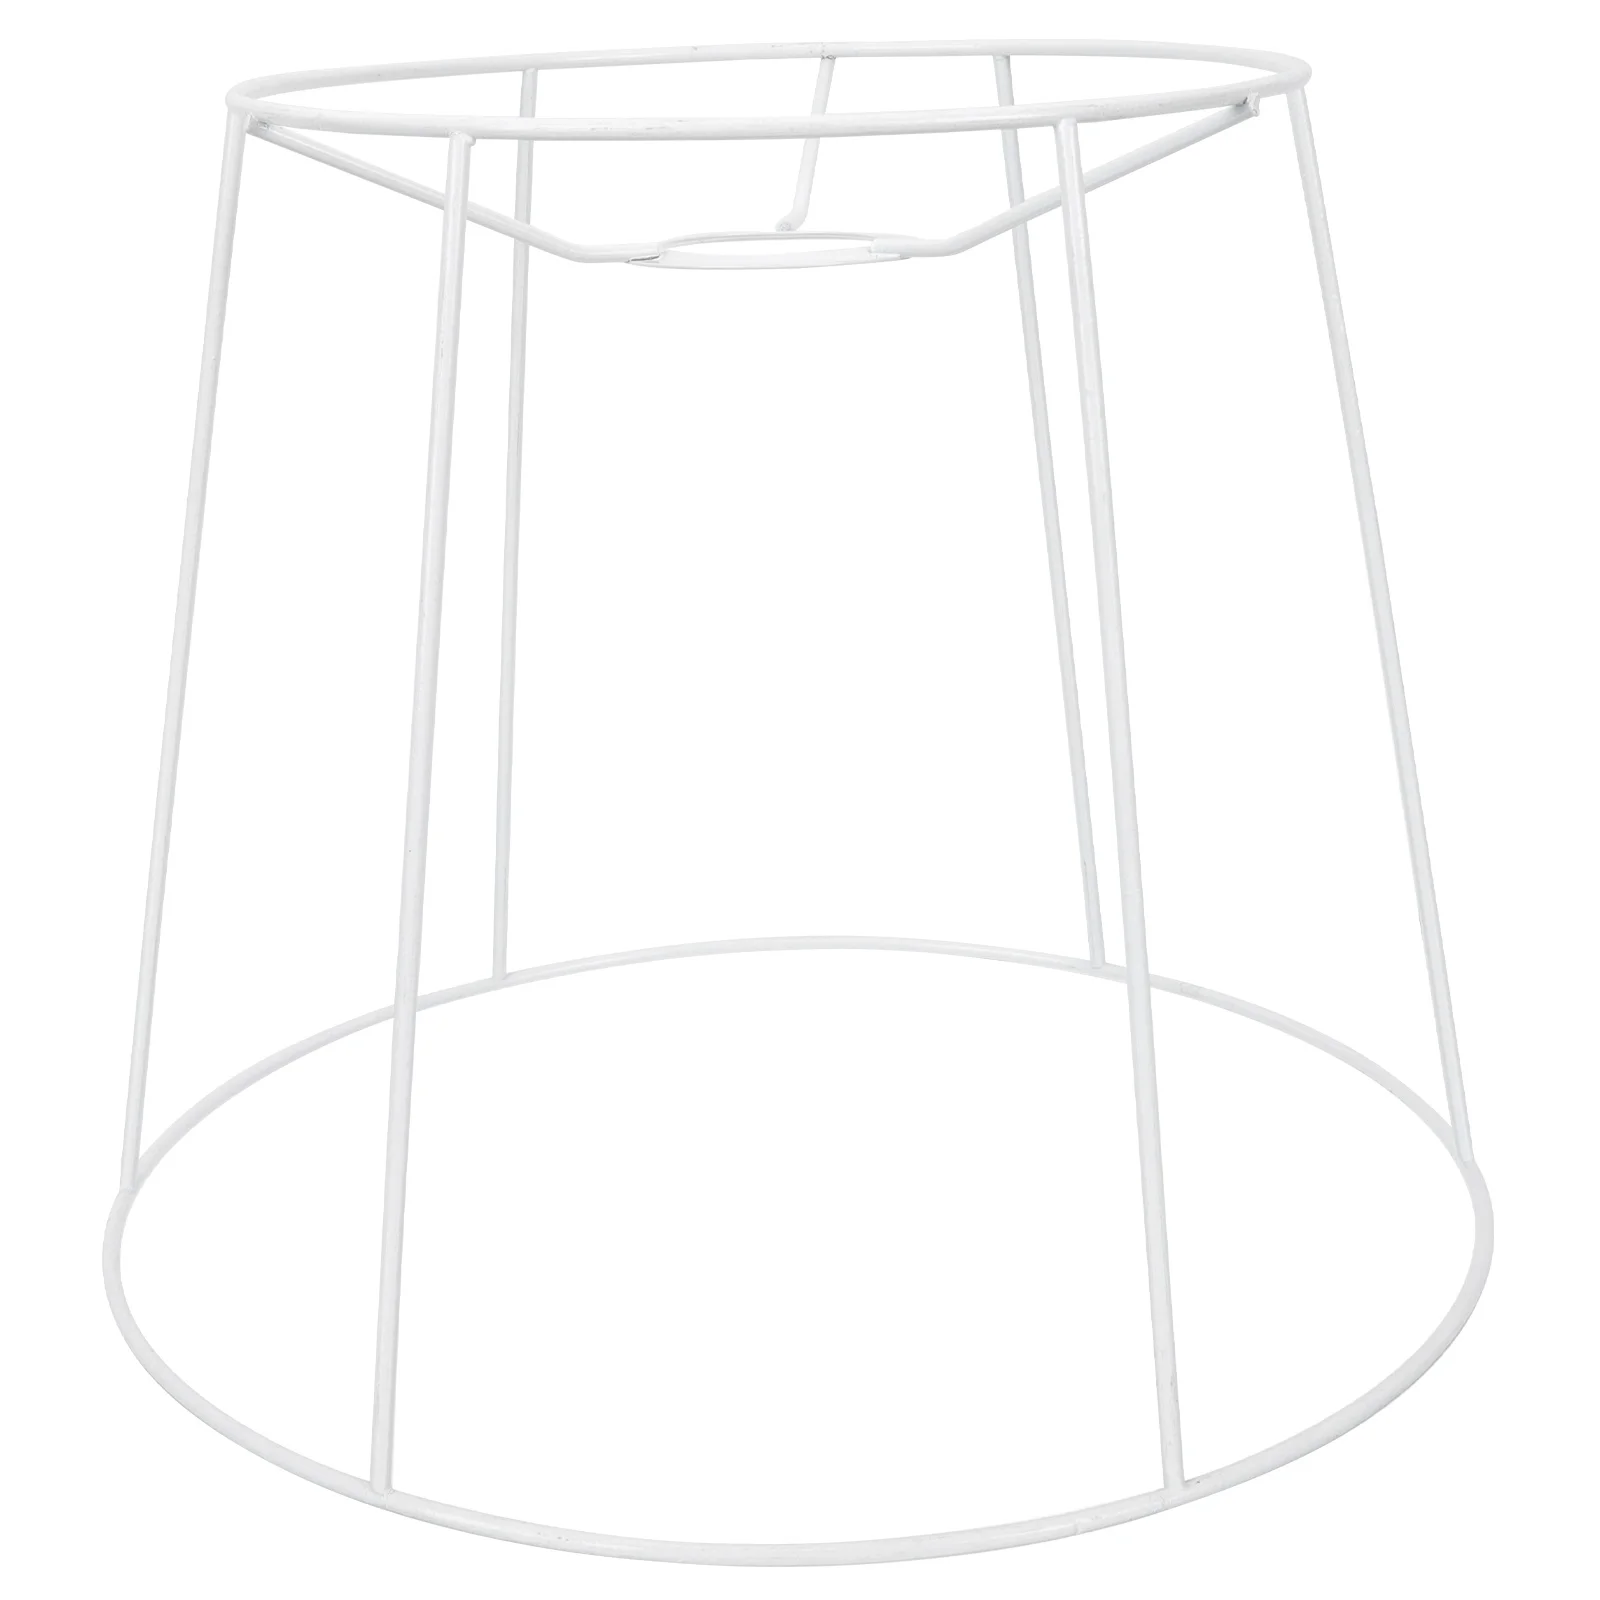 

Lampshade Lamp Shade Ring Frame Wire Frames Chandelier Cage Metal Light Holder Guard Diy Set Spider Bracket Adapter Ceiling